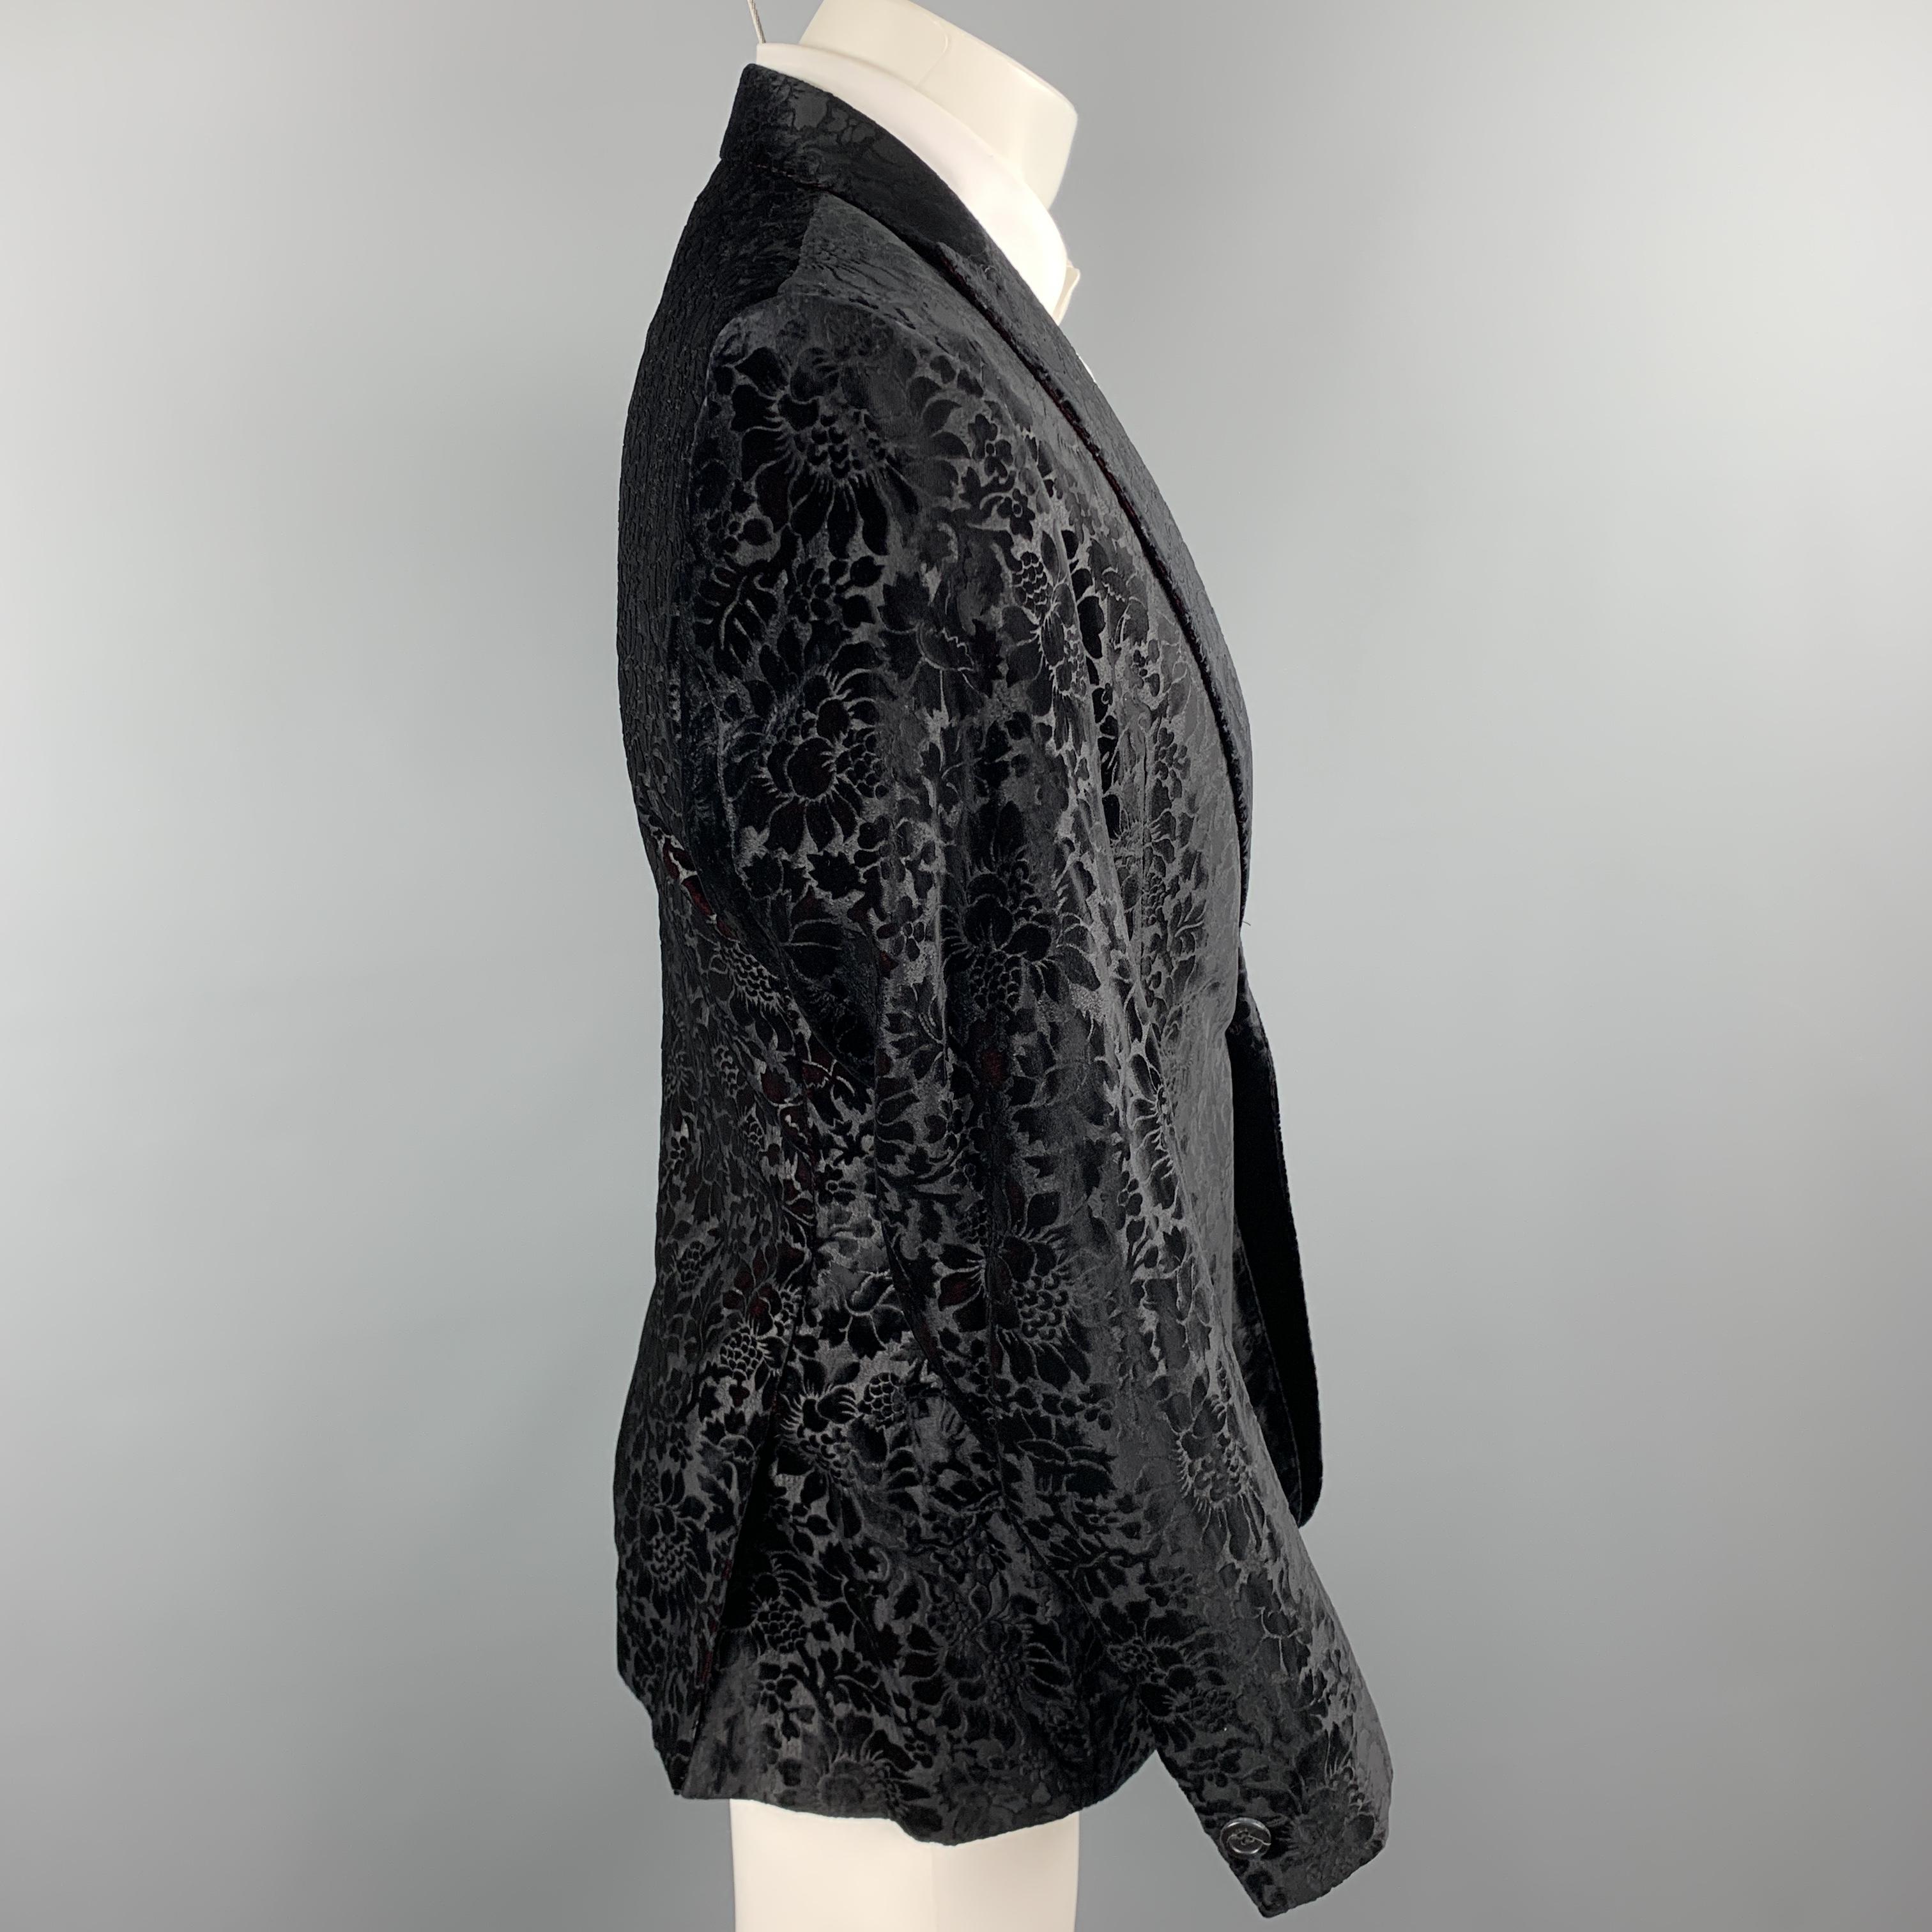 JUST CAVALLI Size 40 Black & Burgundy Floral Virgin Wool Sport Coat 2